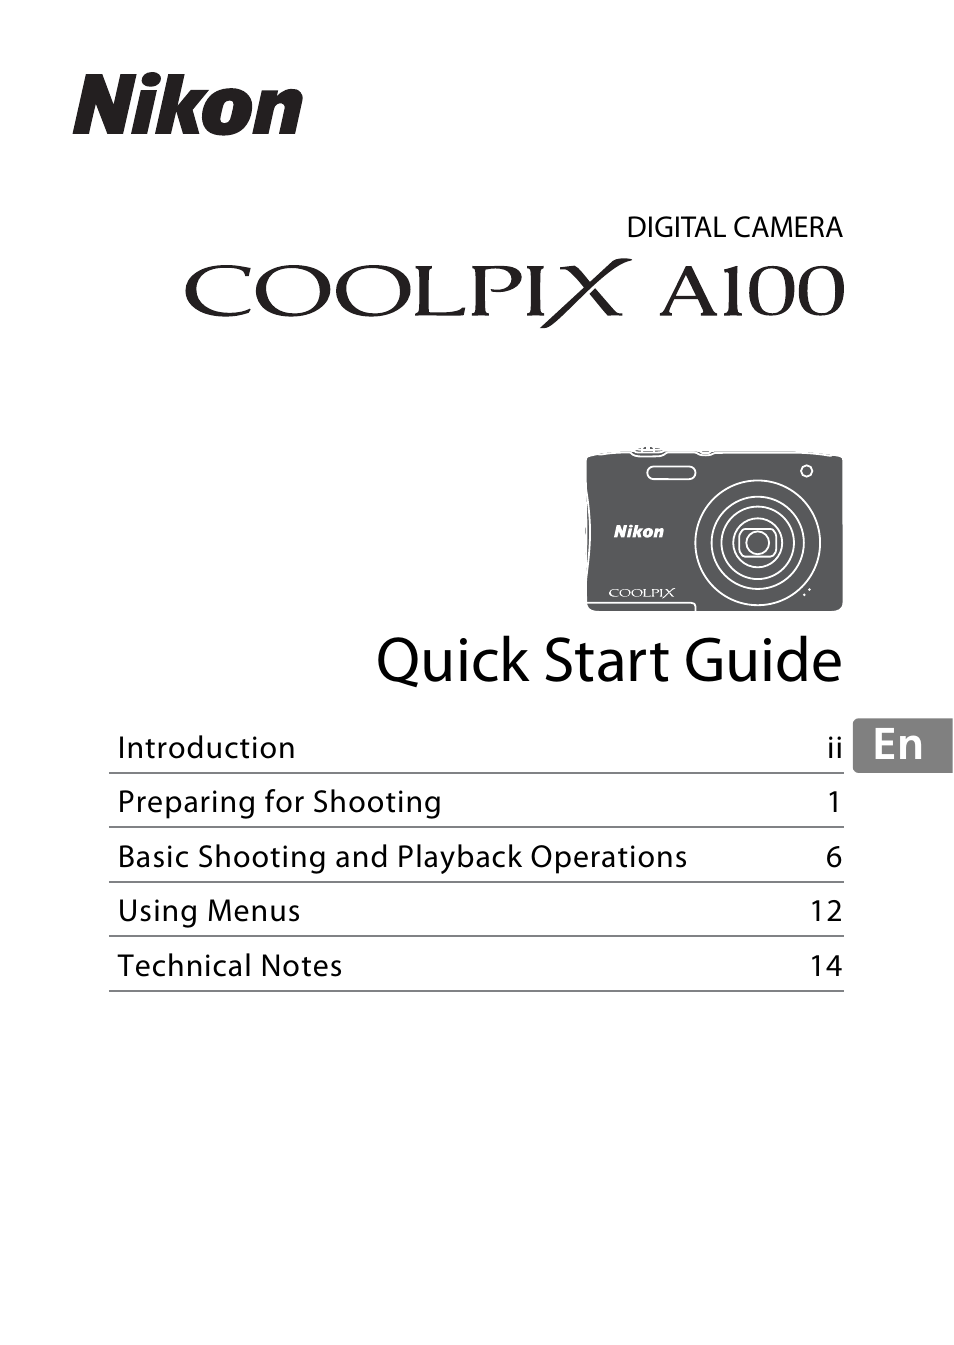 Nikon coolpix a100 manual download windows 7